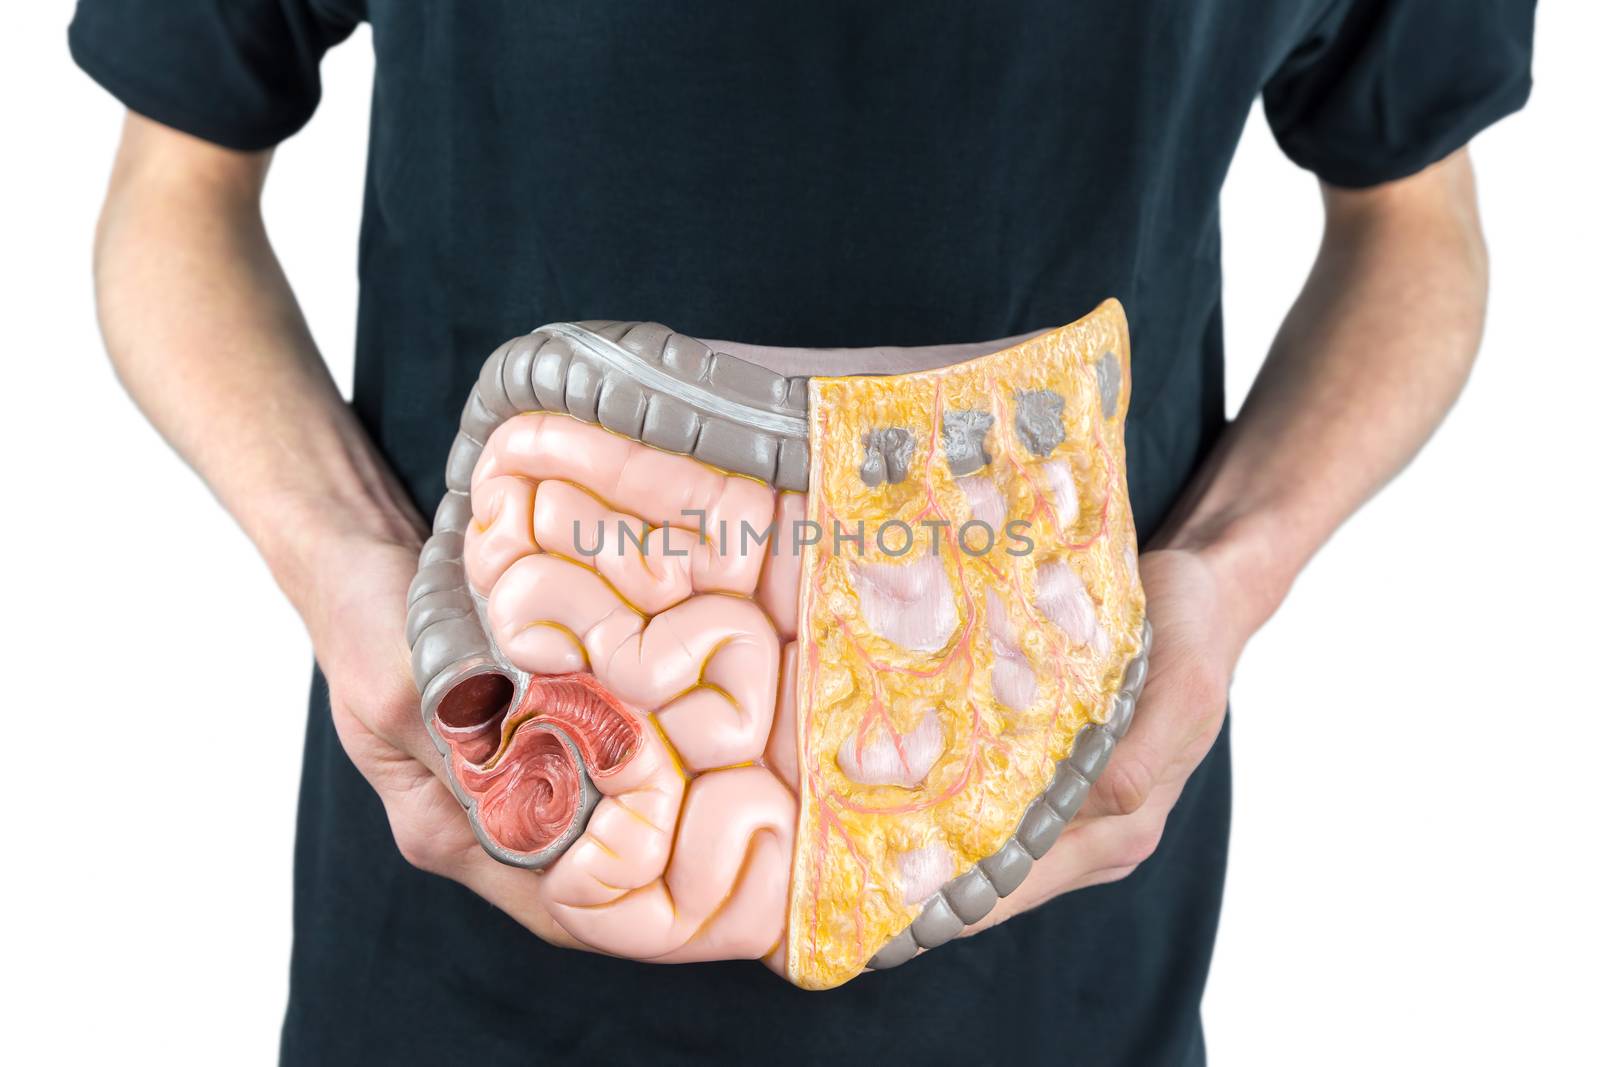 Man holding model of human intestines or bowels on black shirt isolated on white background